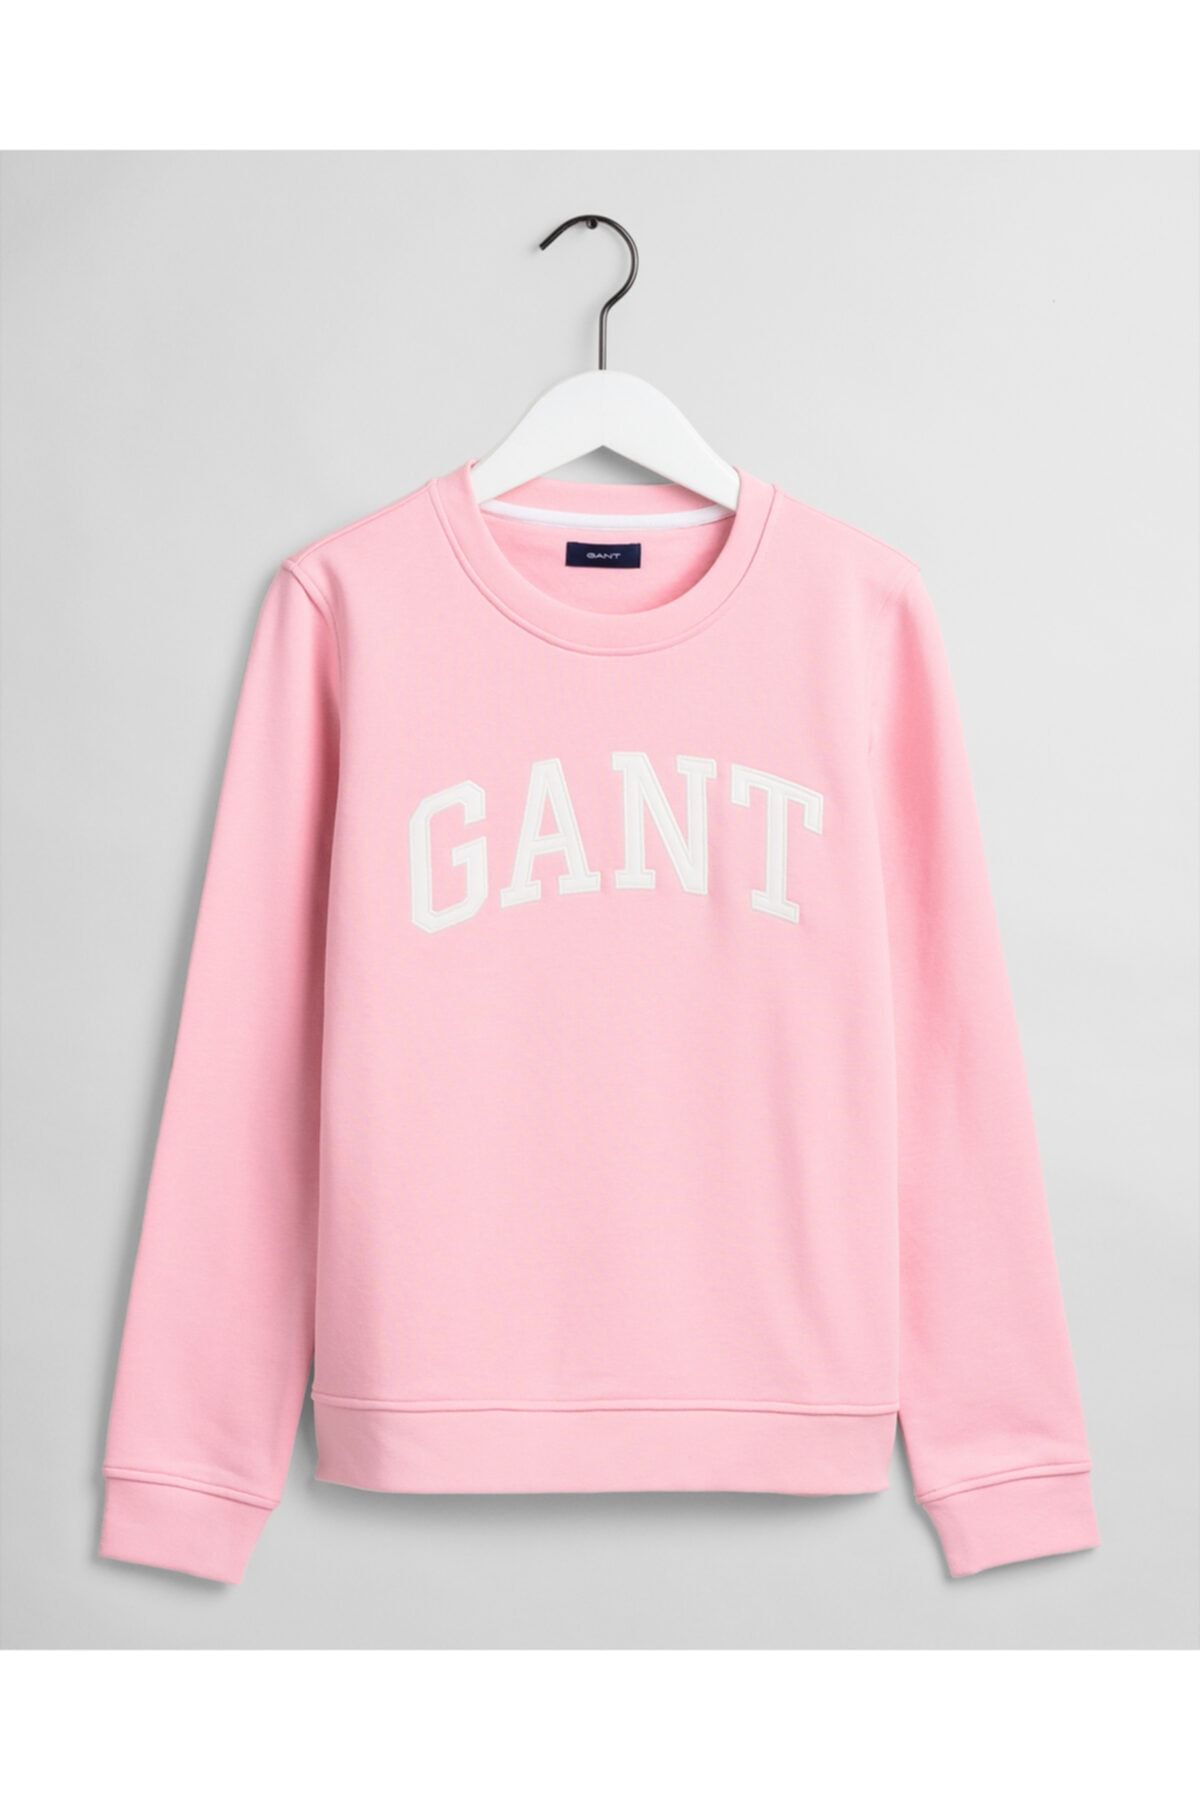 Gant Kadın Pembe Sweatshirt